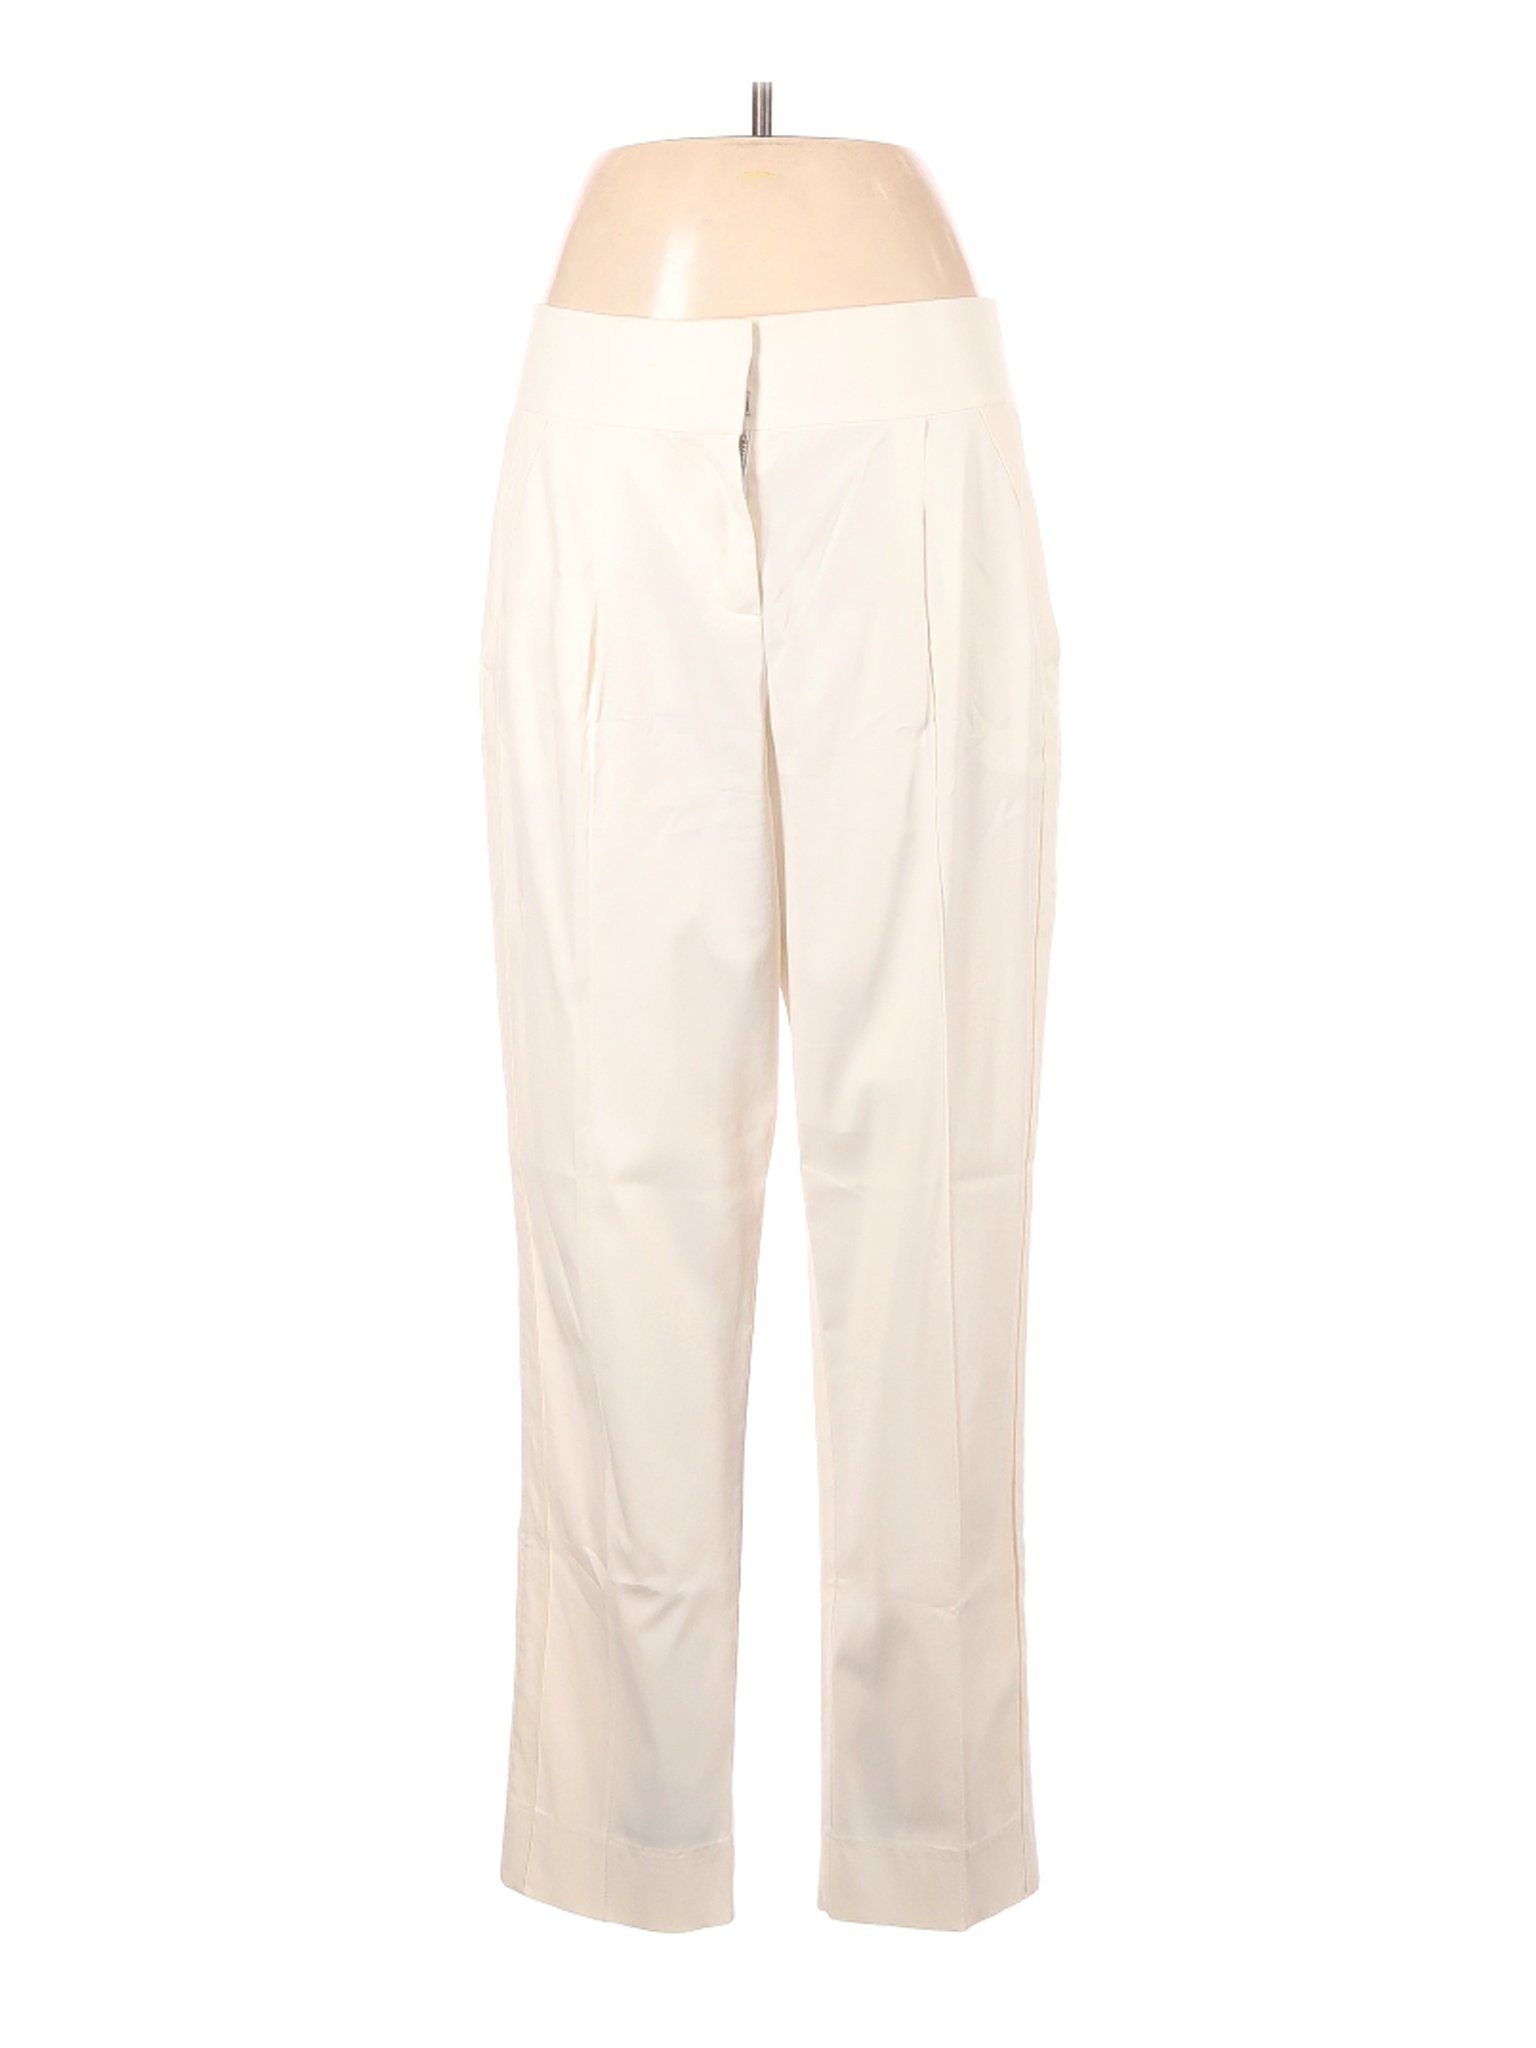 Rebecca Taylor Women Ivory Dress Pants 8 | eBay